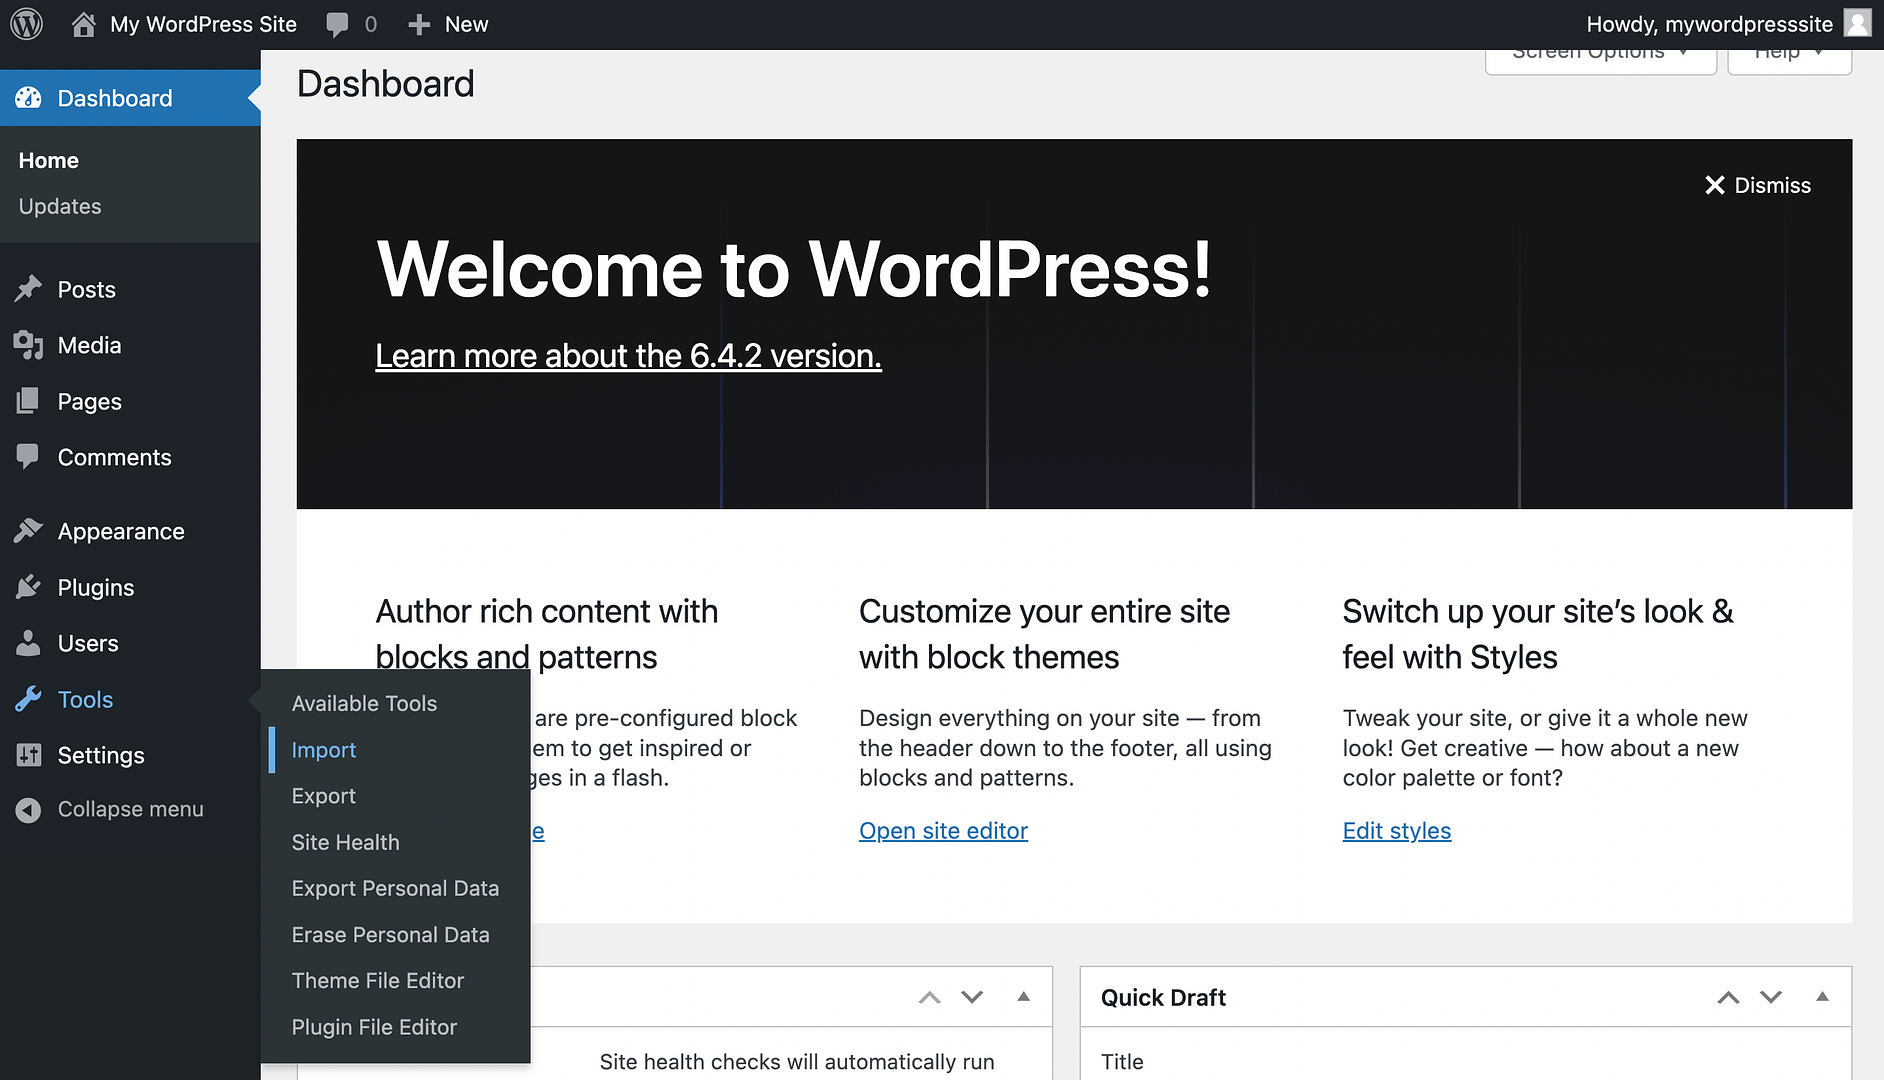 The WordPress Tools menu